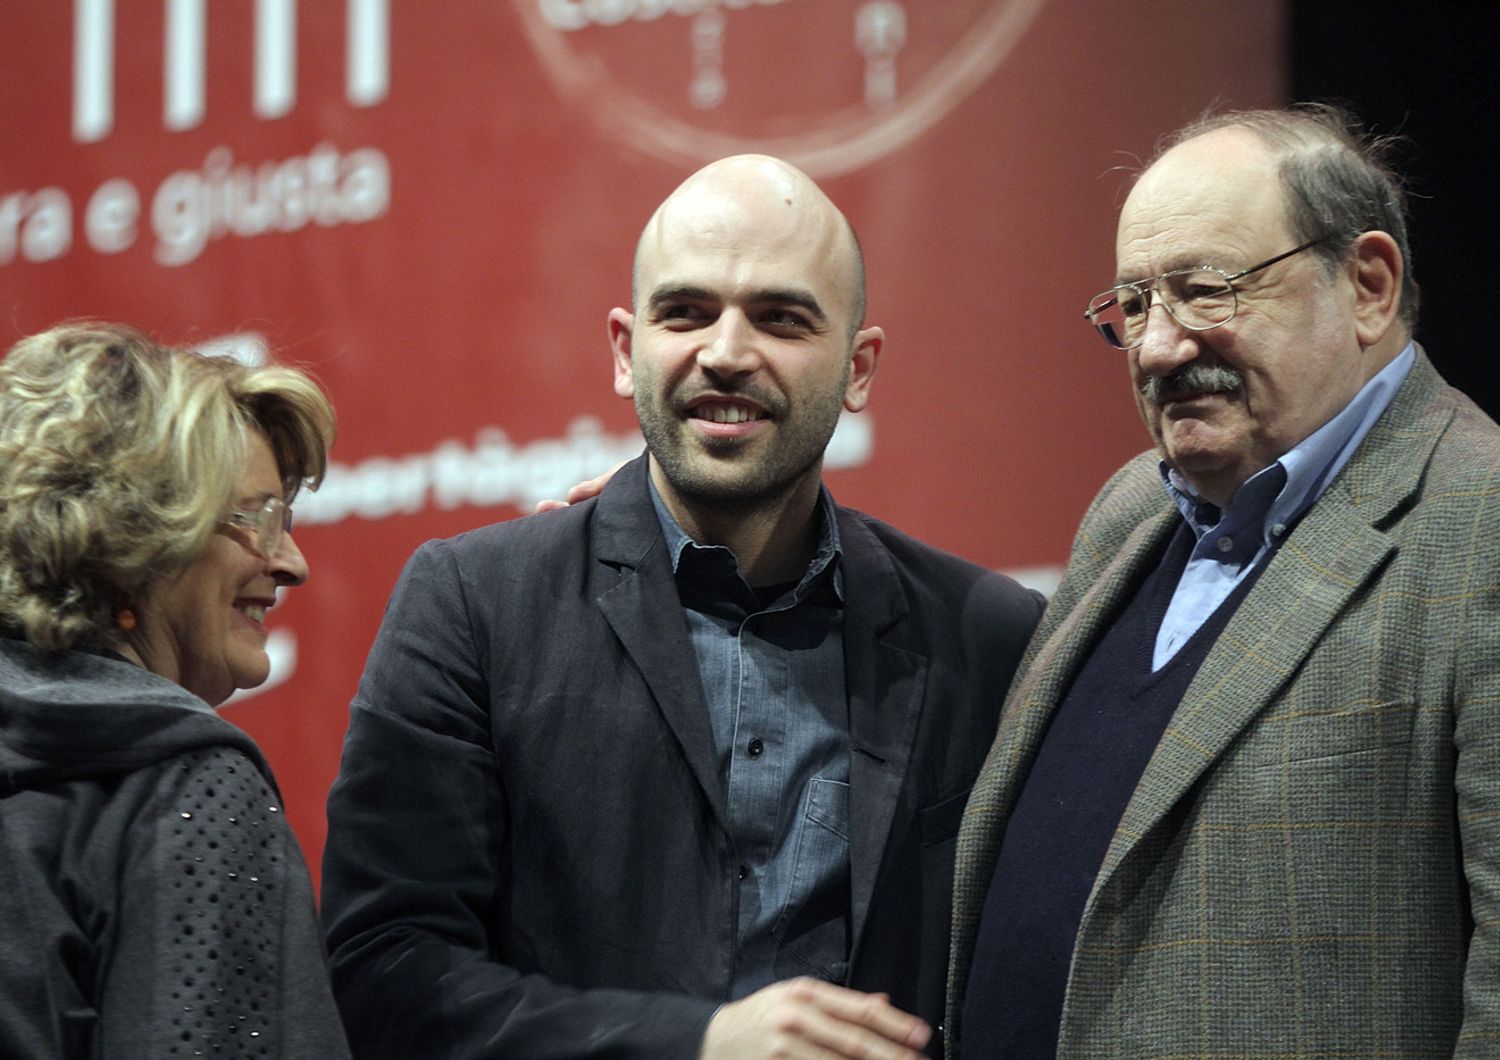 Umberto Eco con Roberto Saviano (Agf)